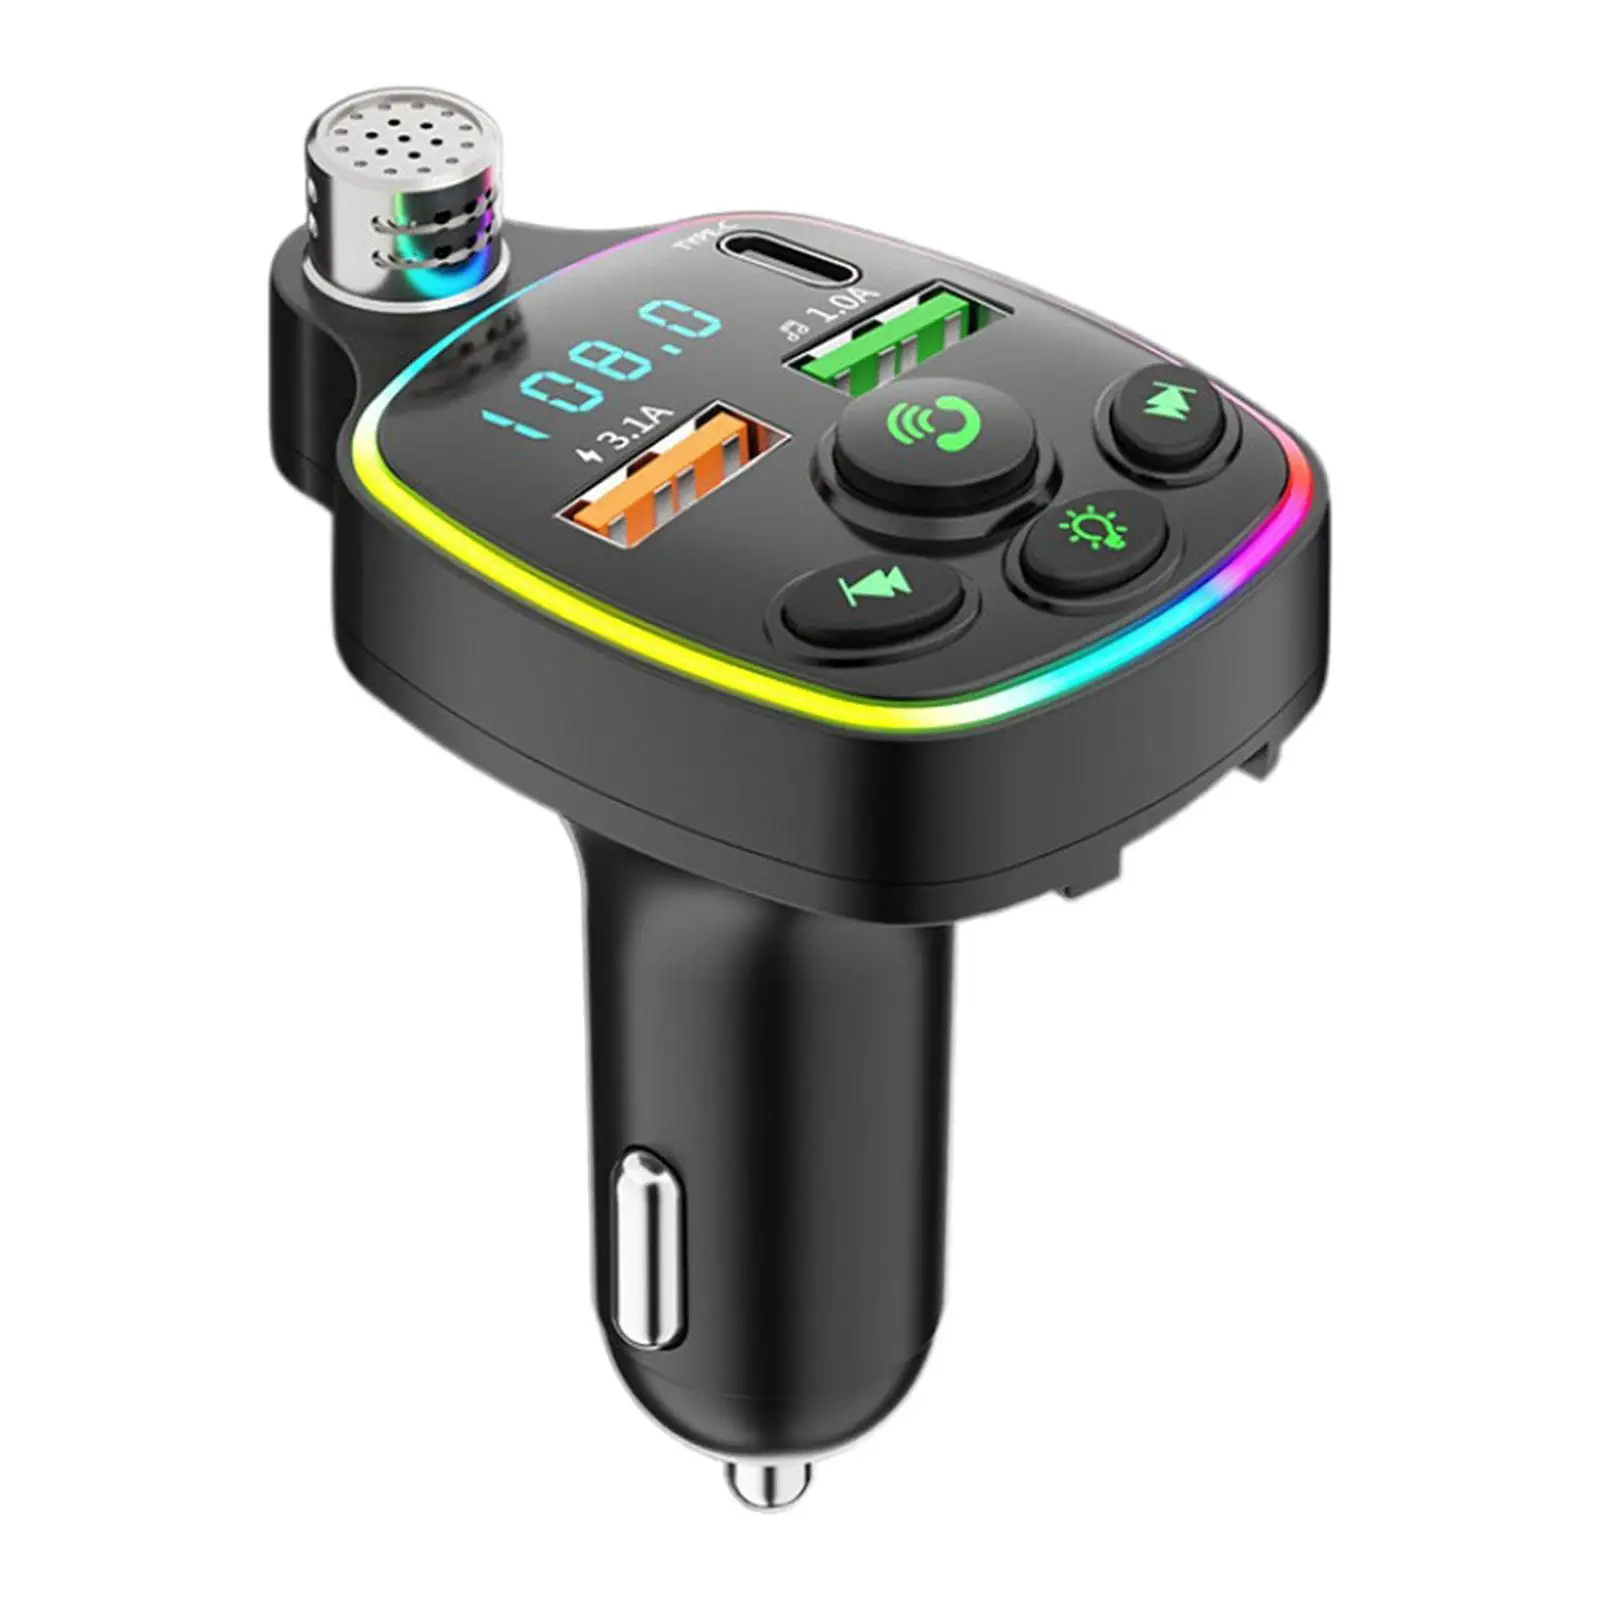 Car Adapter Support U Disk Handsfree Calling Fast Charging Color LED Backlit Portable Audio Receiver Car Charger FM Transmitter